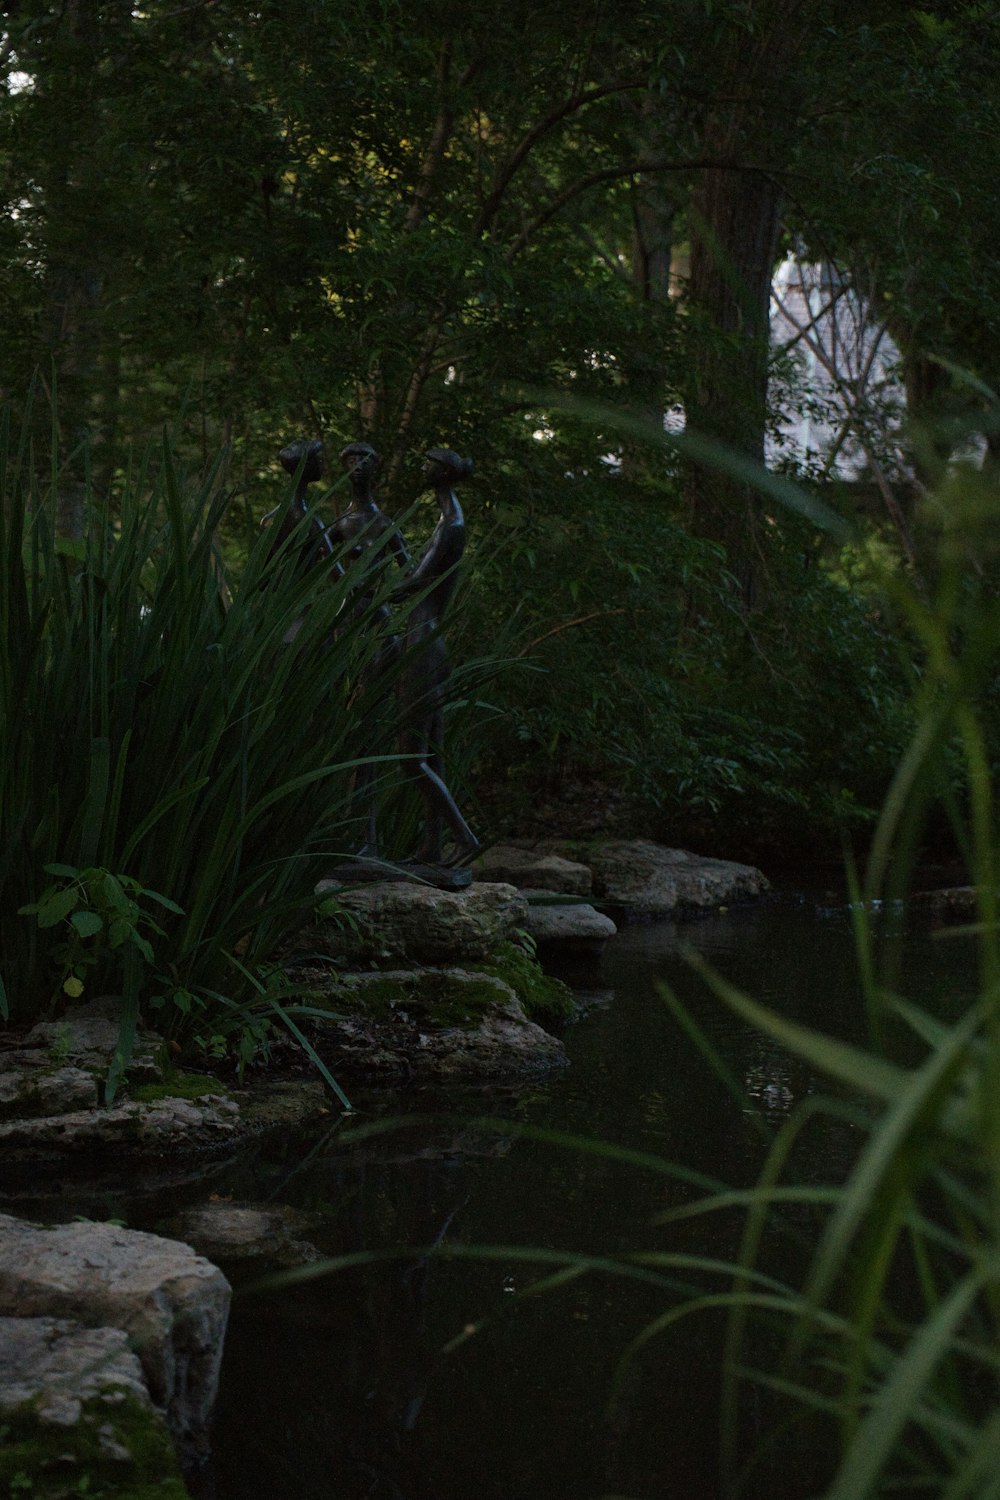 a statue of a man riding a bike next to a pond